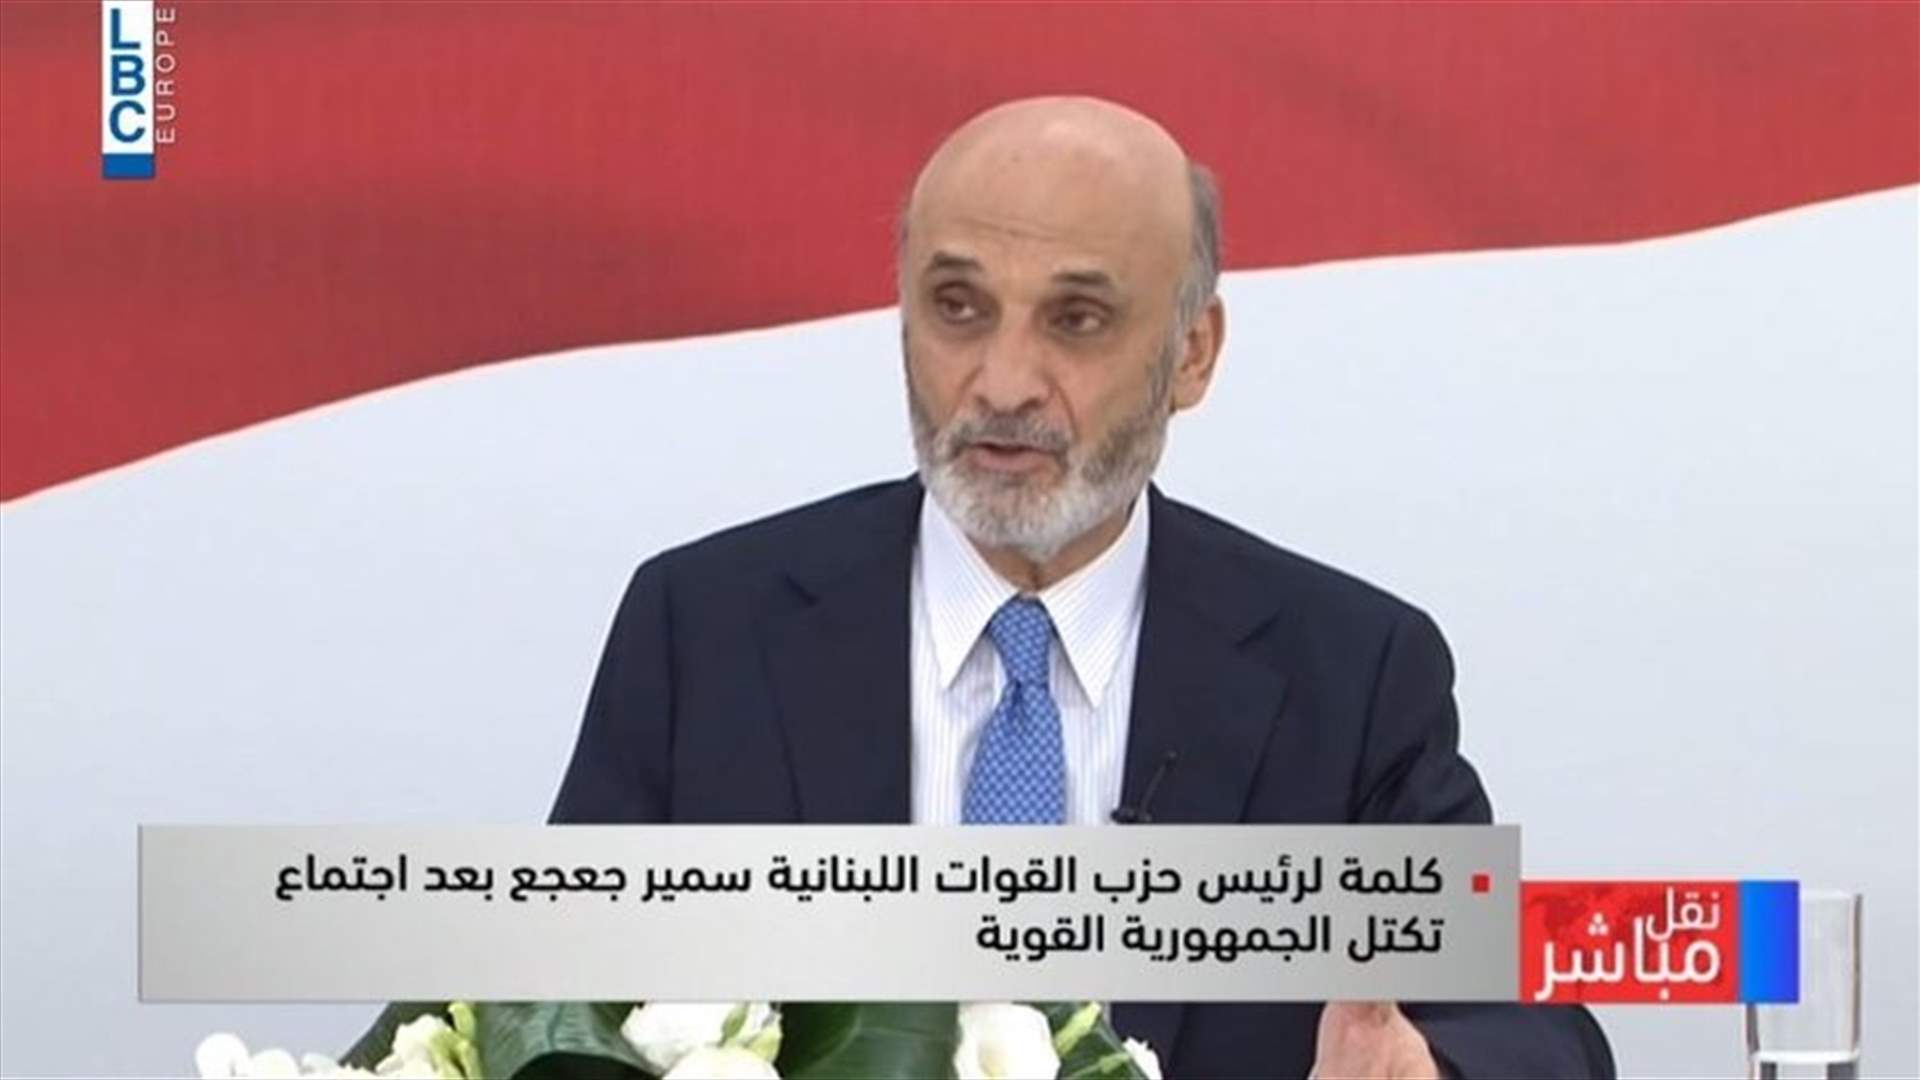 Geagea calls for forming technocratic government as a rescue measure